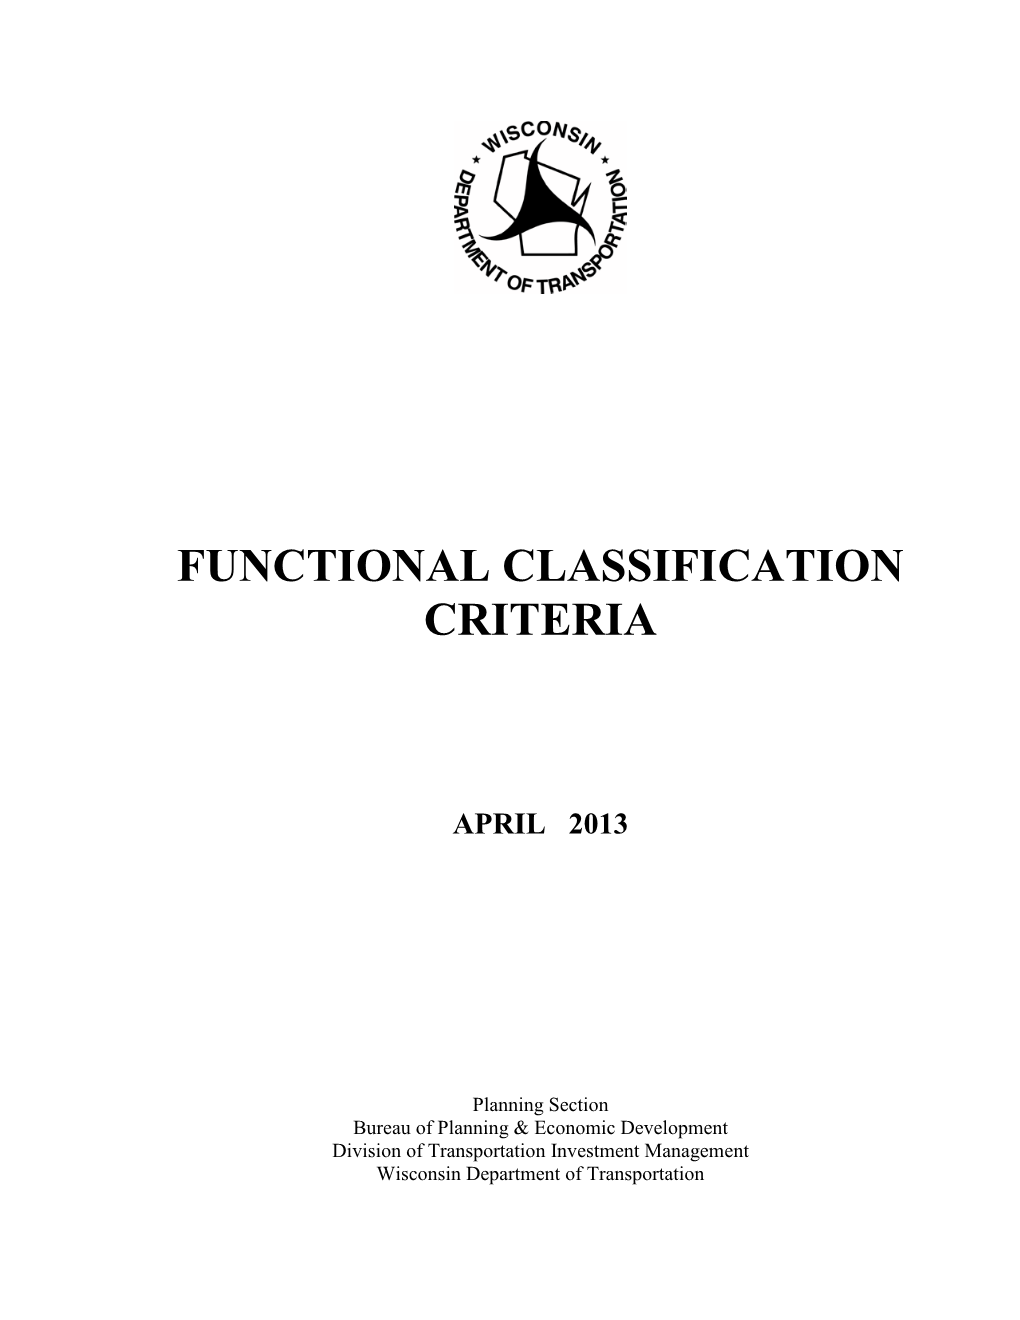 Functional Classification Criteria